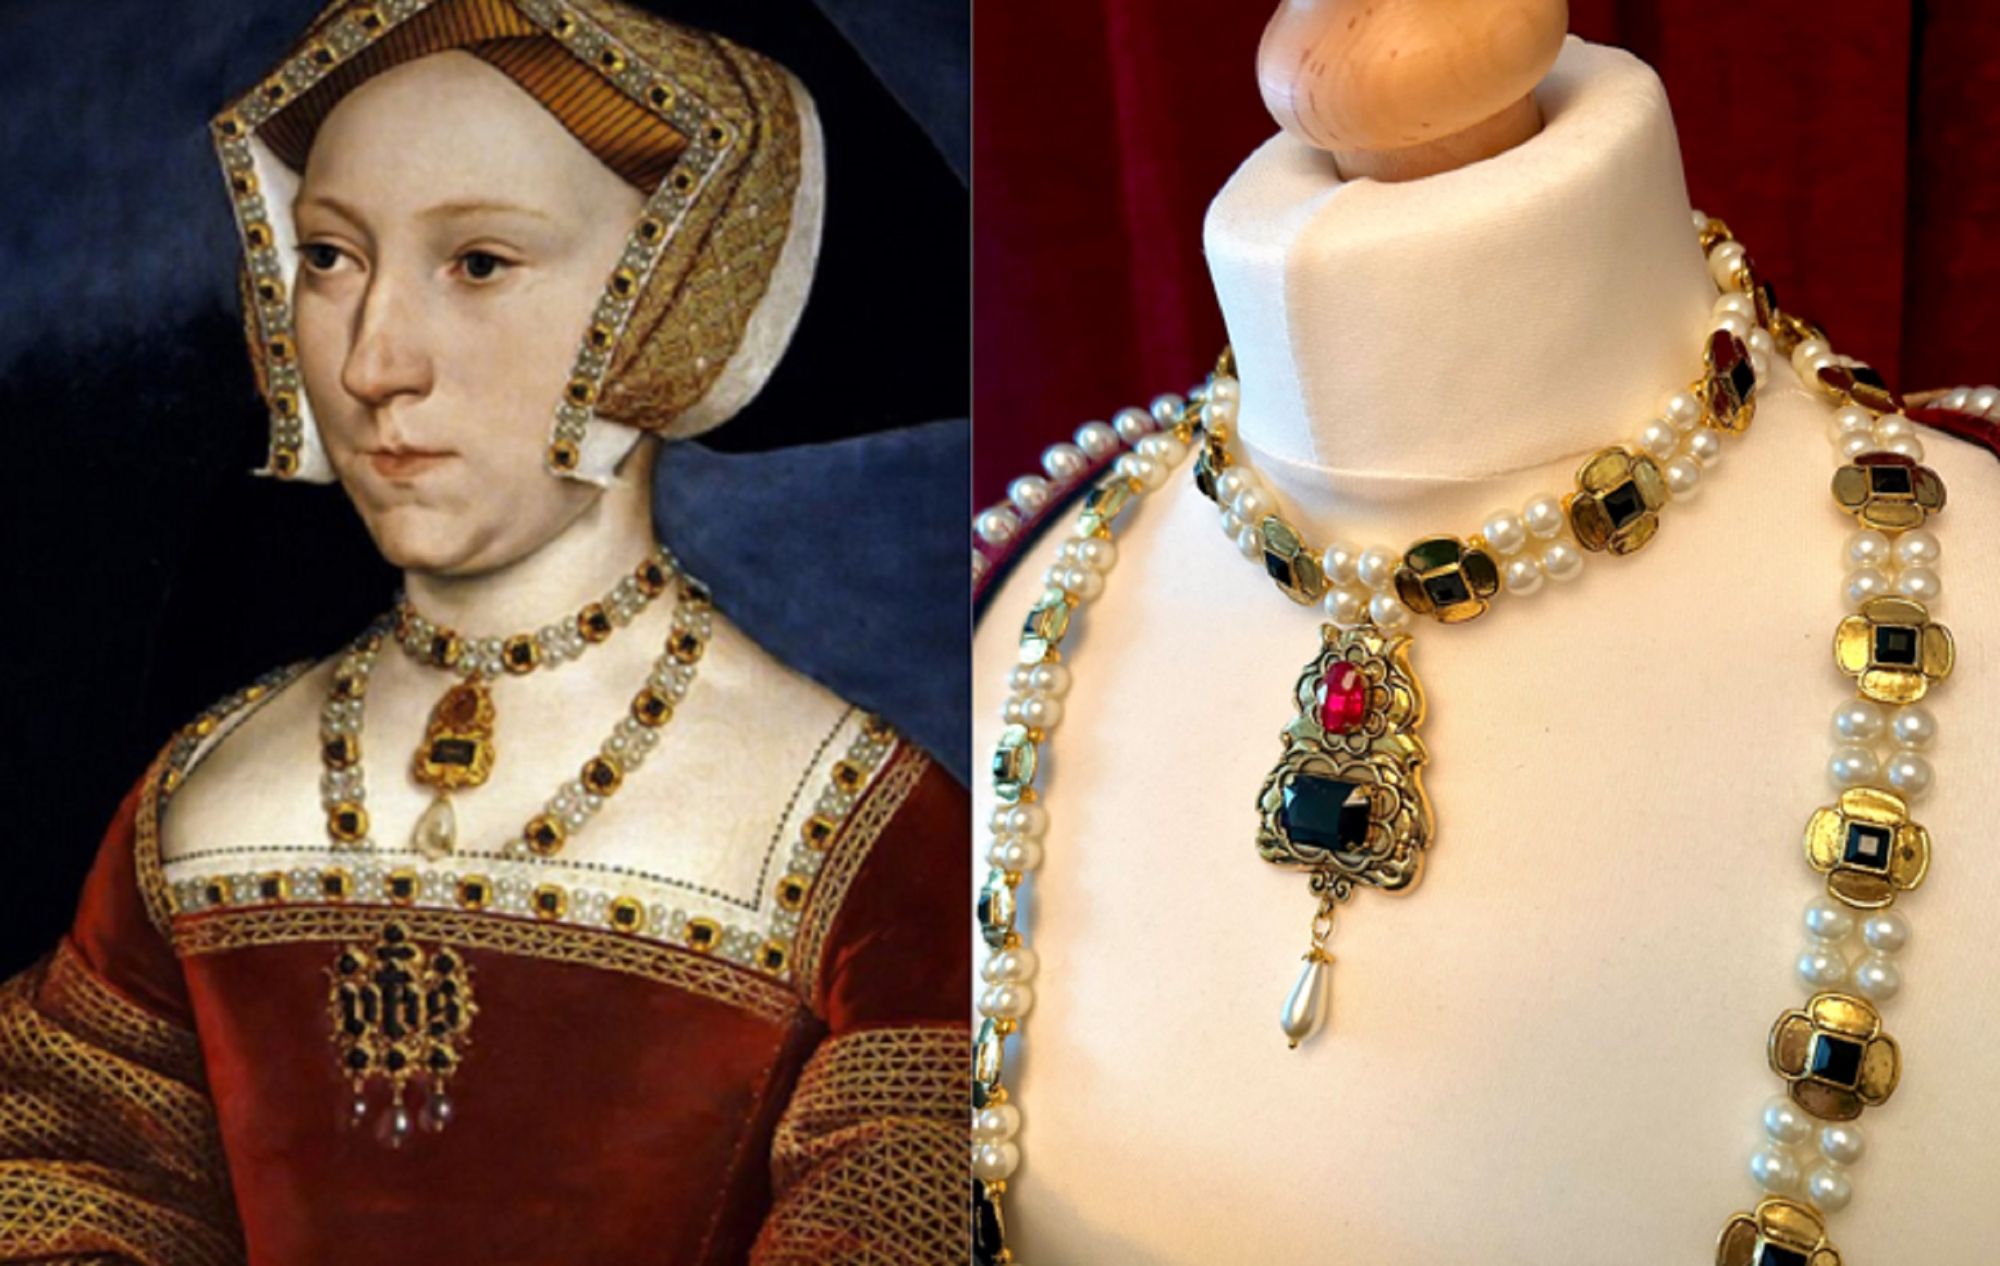 Seymour necklace compare new